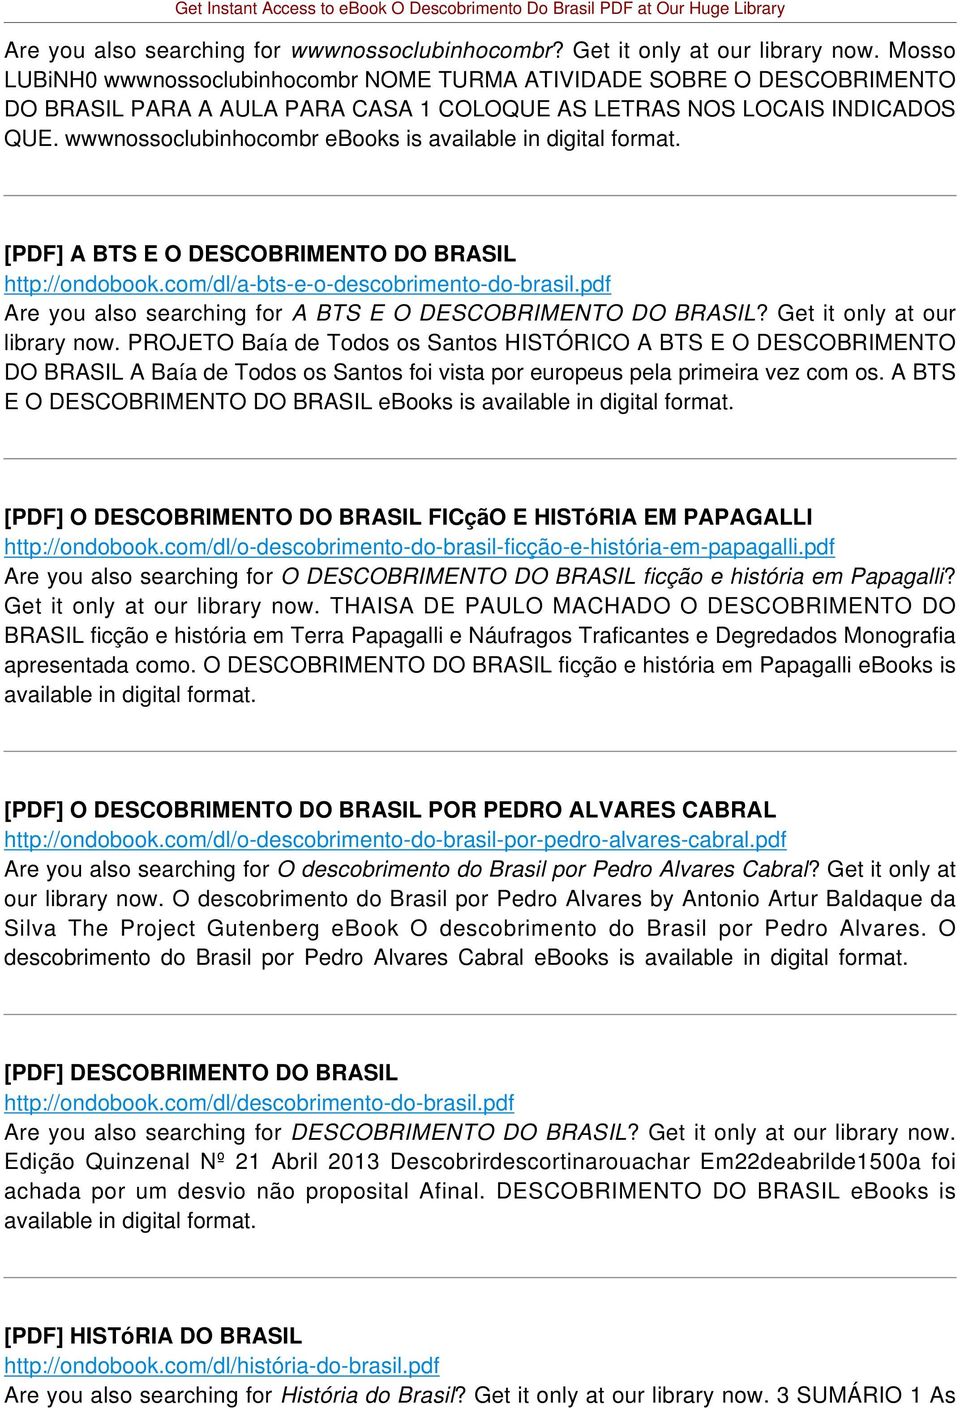 wwwnossoclubinhocombr ebooks is available in digital format. [PDF] A BTS E O DESCOBRIMENTO DO BRASIL http://ondobook.com/dl/a-bts-e-o-descobrimento-do-brasil.